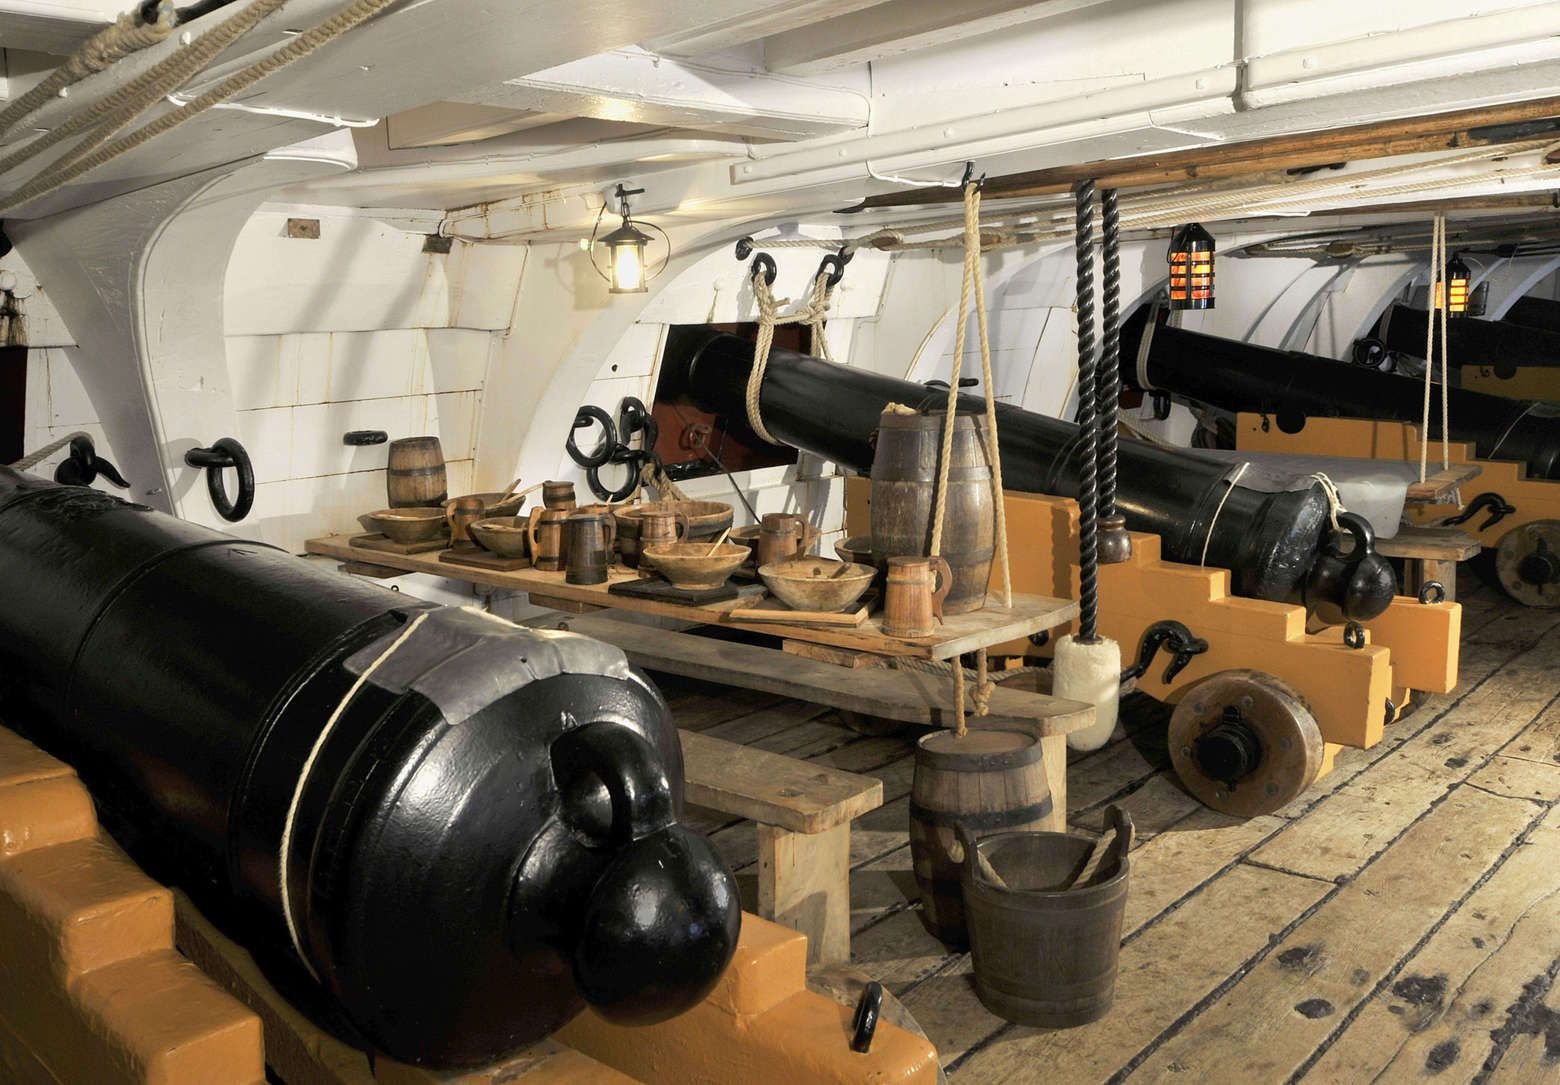 Палуба военного корабля. ХМС Виктори пушки. Корабельная артиллерия 17 века. Корабельные пушки 17 века парусного флота. Пушка на корабле.